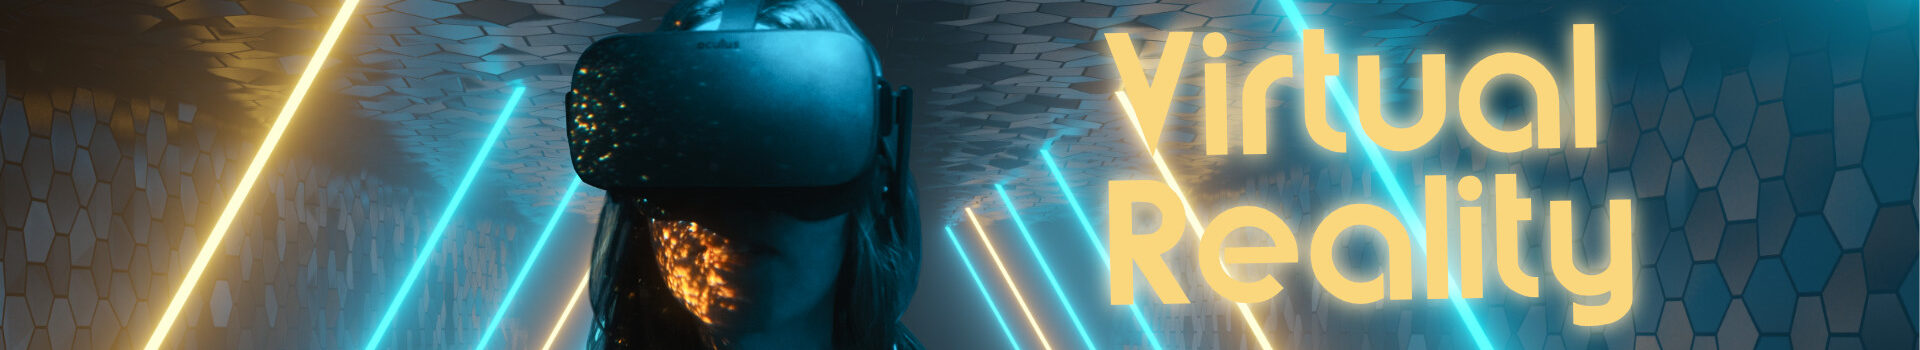 Virtual Reality mit der Oculus Rift